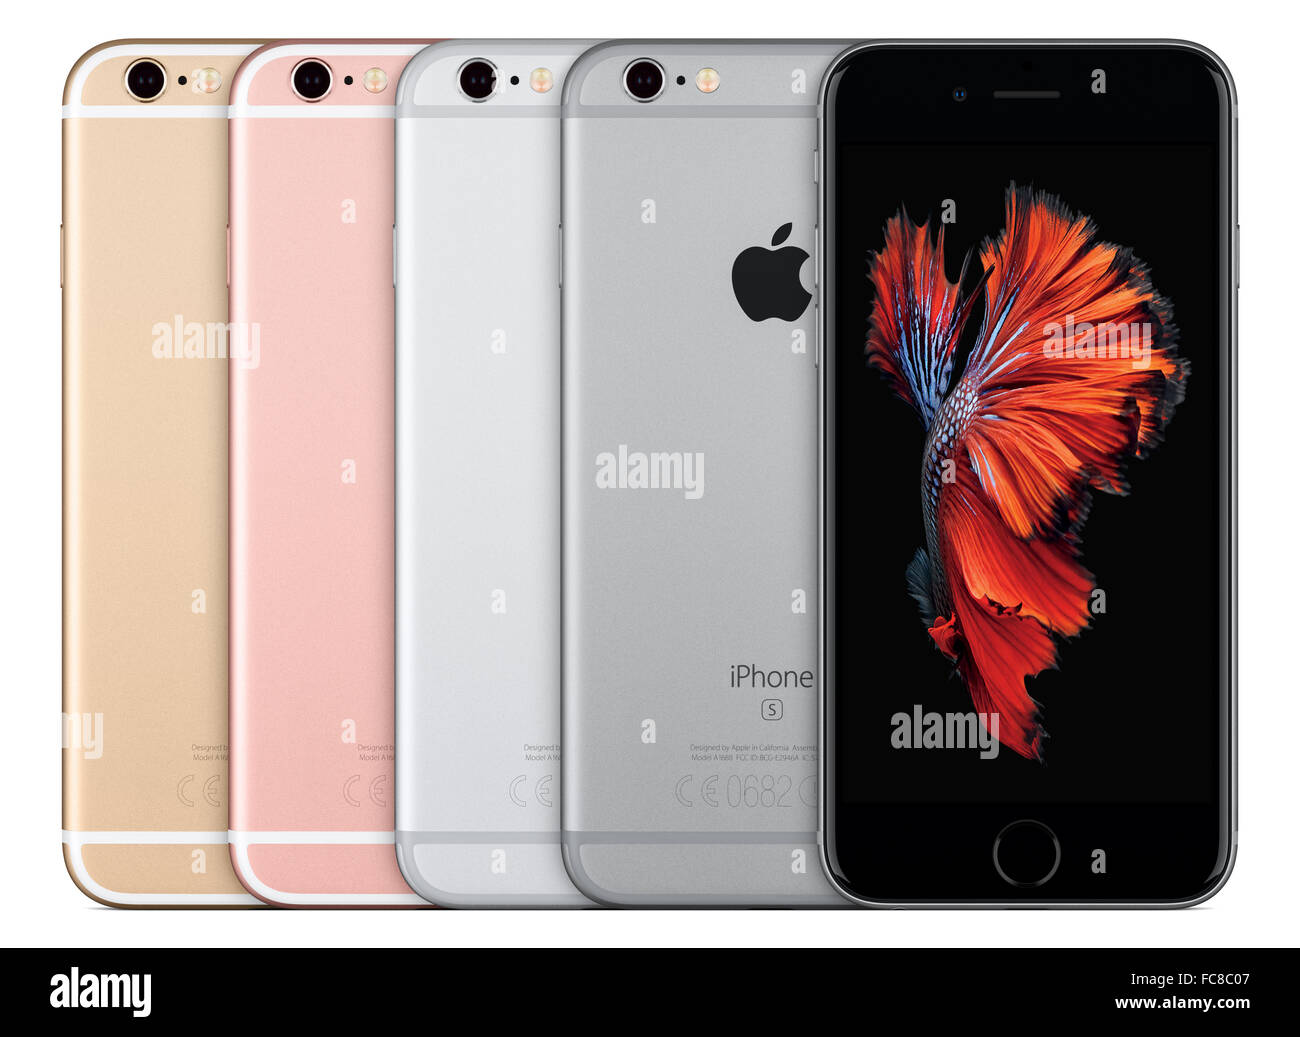 Varna, Bulgarien - 24. Oktober 2015: Vorderansicht des Apple iPhone 6 s. Alle Farben-Konzept: Space Grau, Silber, Gold, Rosegold Stockfoto